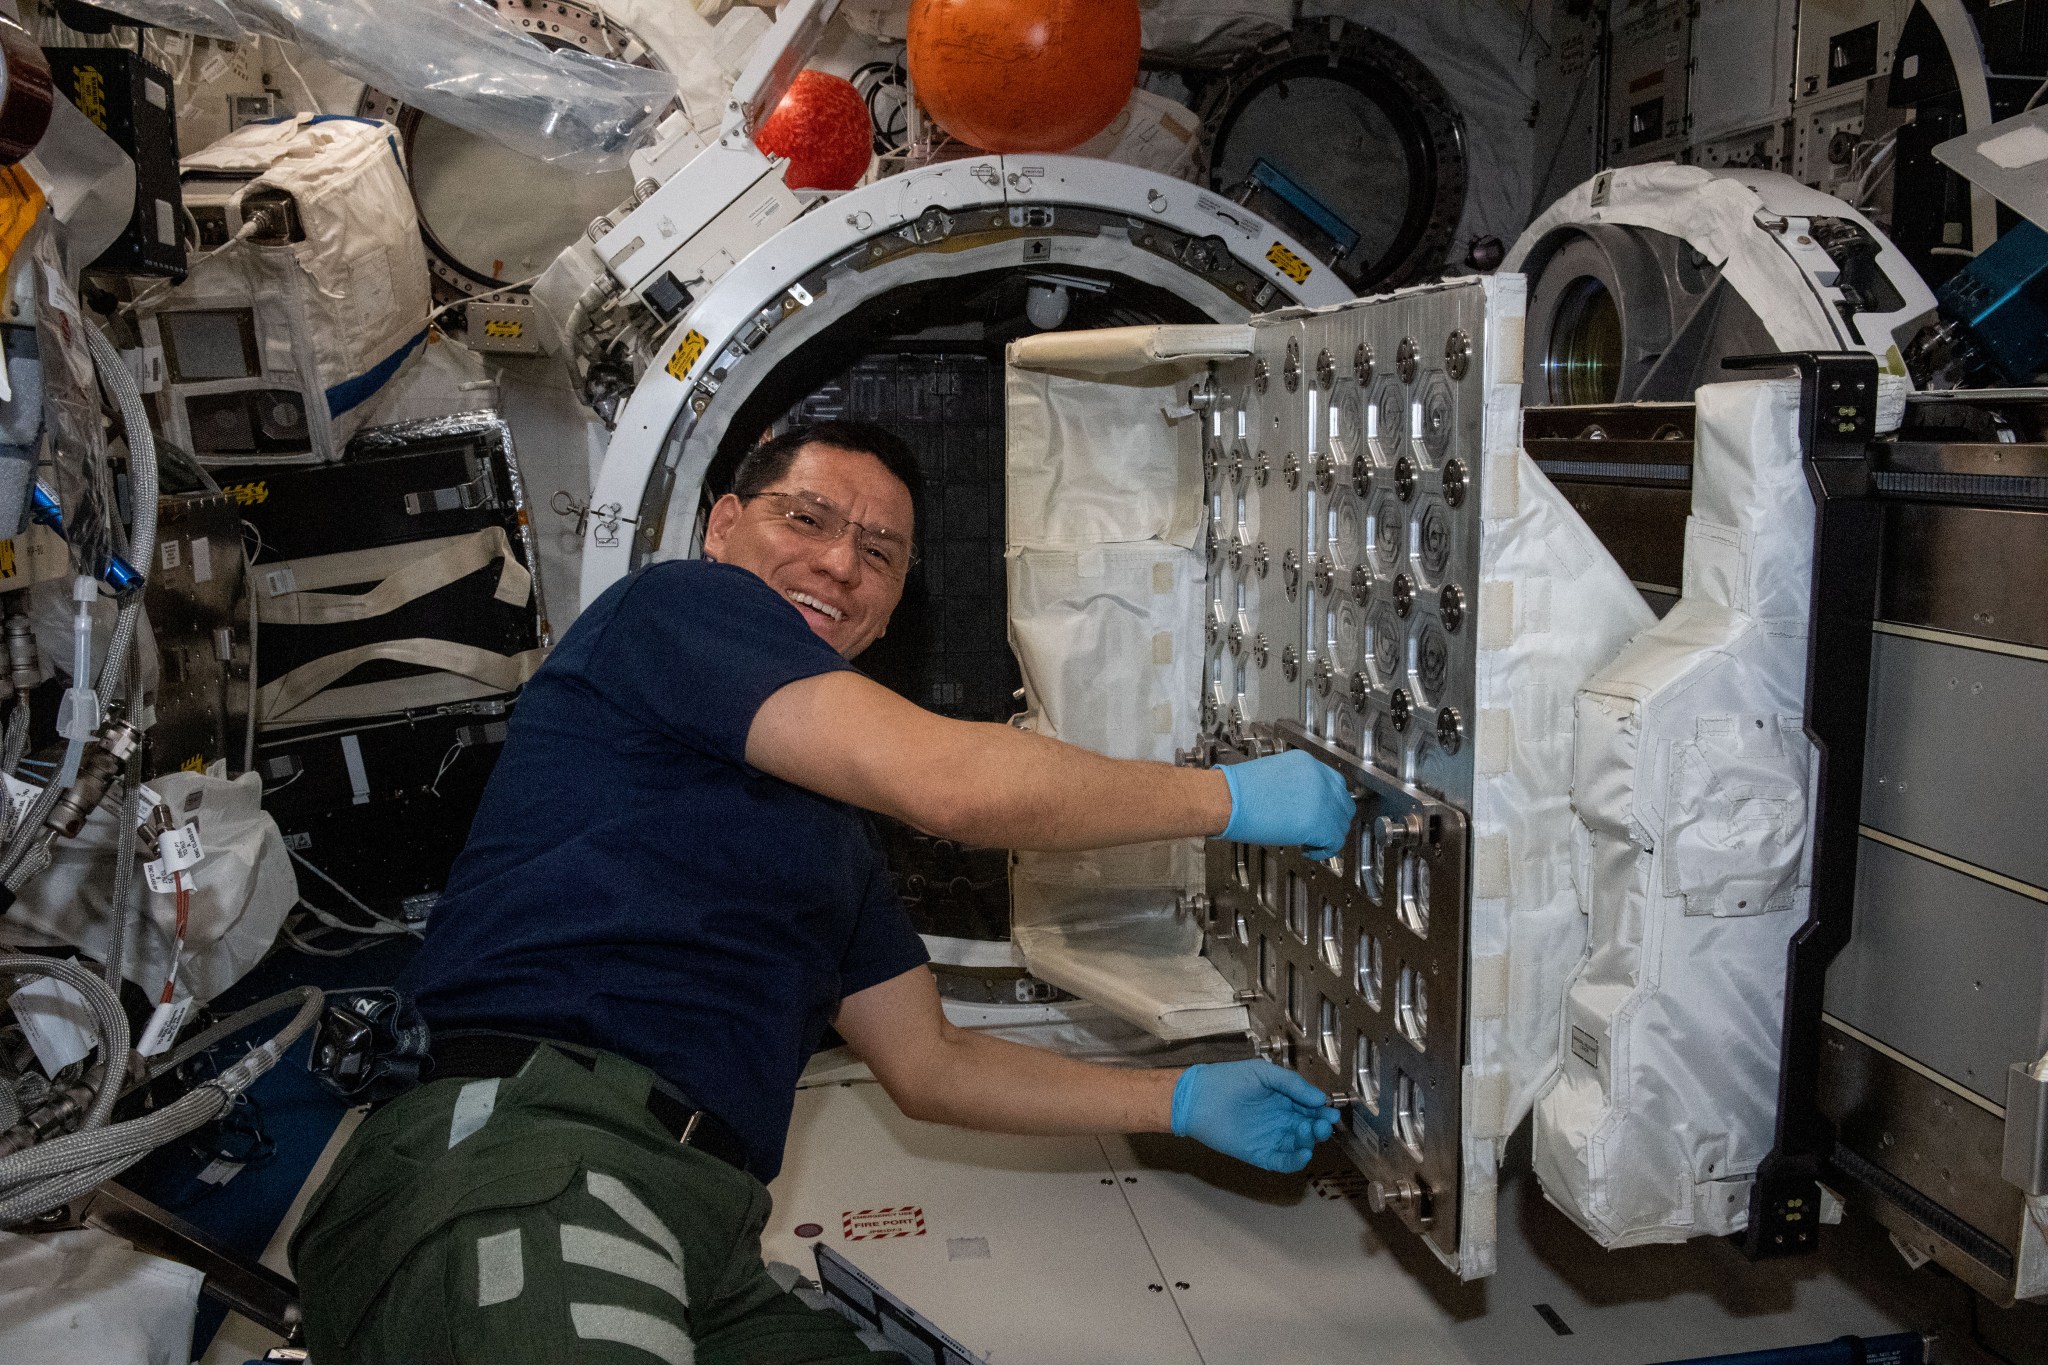 NASA astronaut Frank Rubio installs the NanoRacks CubeSat Deployer in preparation for deploying six student satellite projects.